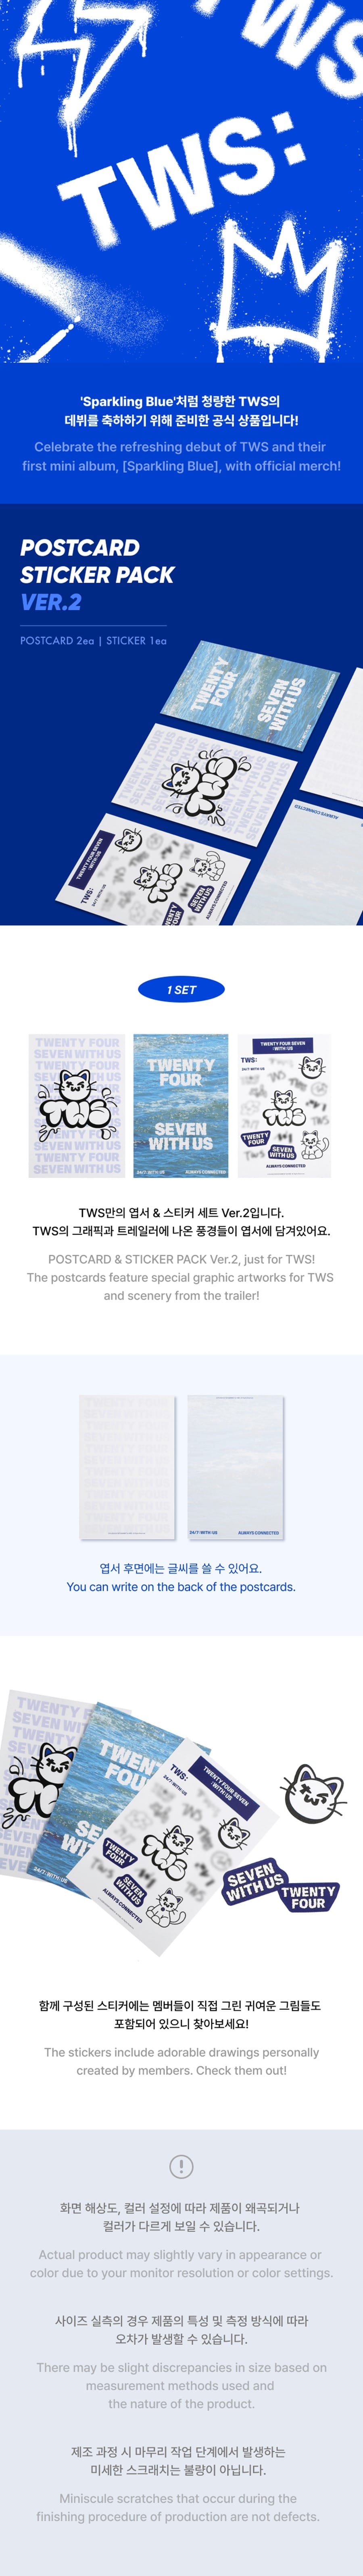 tws-postcard-sticker-ver-2-wholesales